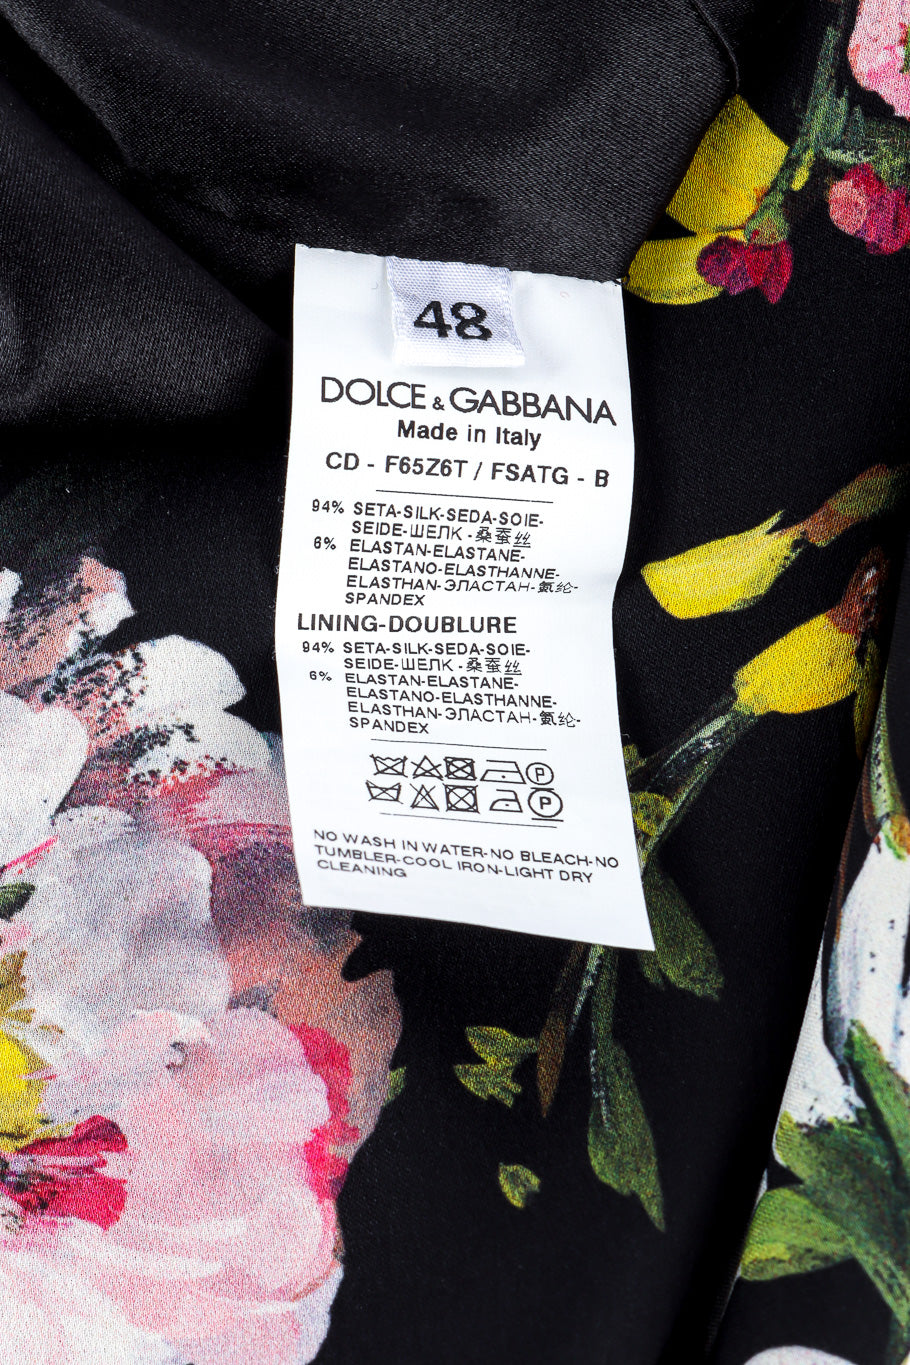 Dolce & Gabbana Floral Printed Sheath Dress size tag @recessla